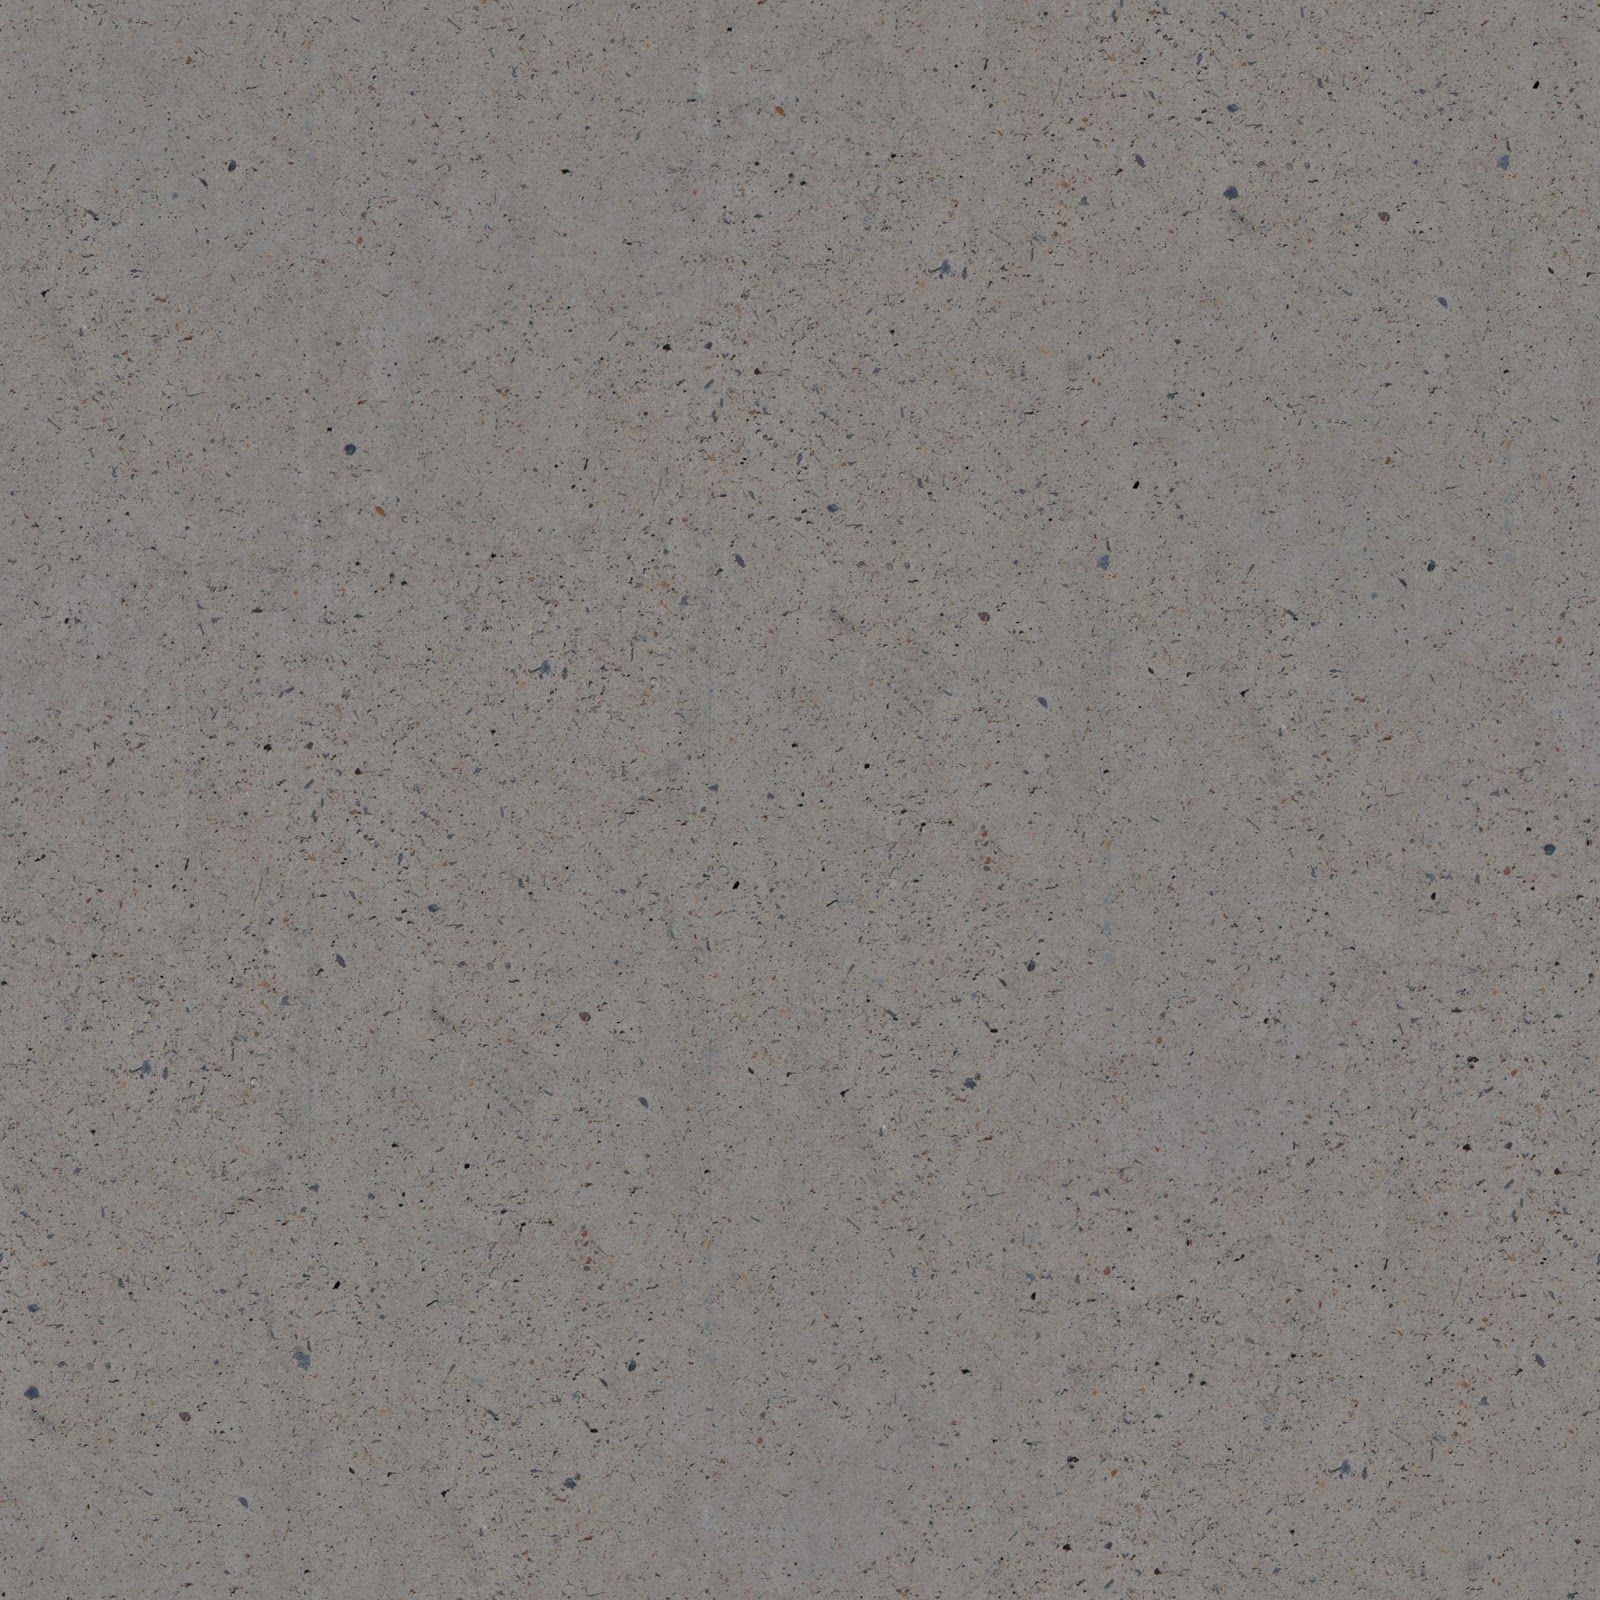 High Resolution Seamless Textures: Concrete